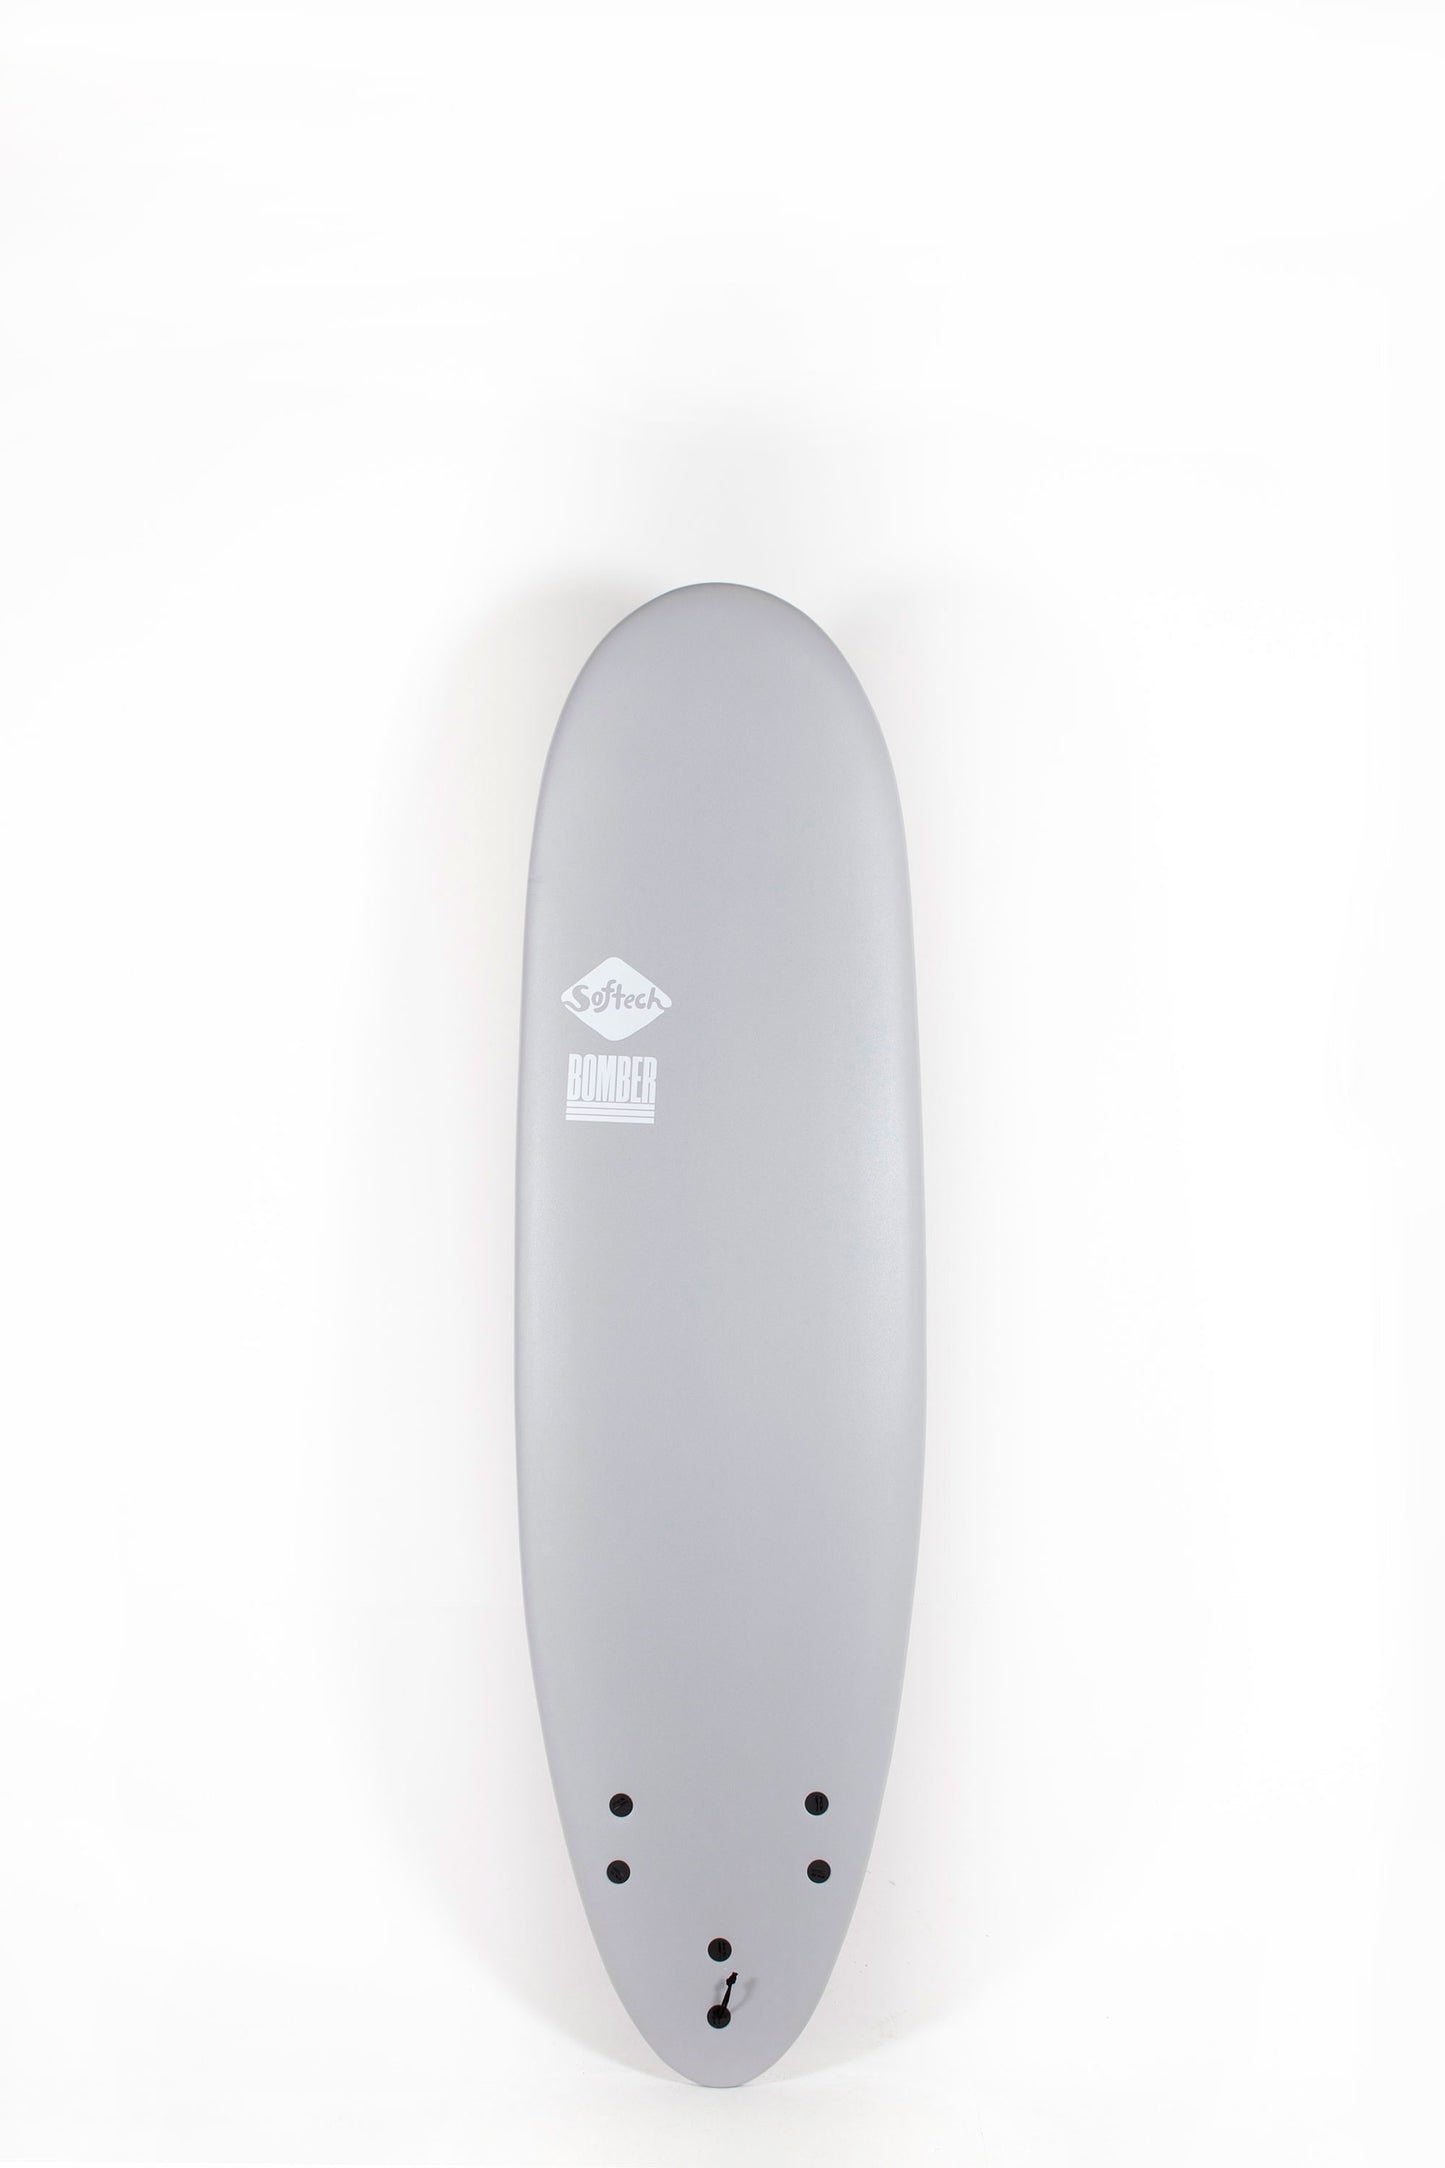 
                  
                    Pukas Surf Shop - SOFTECH - BOMBER 5''10
                  
                